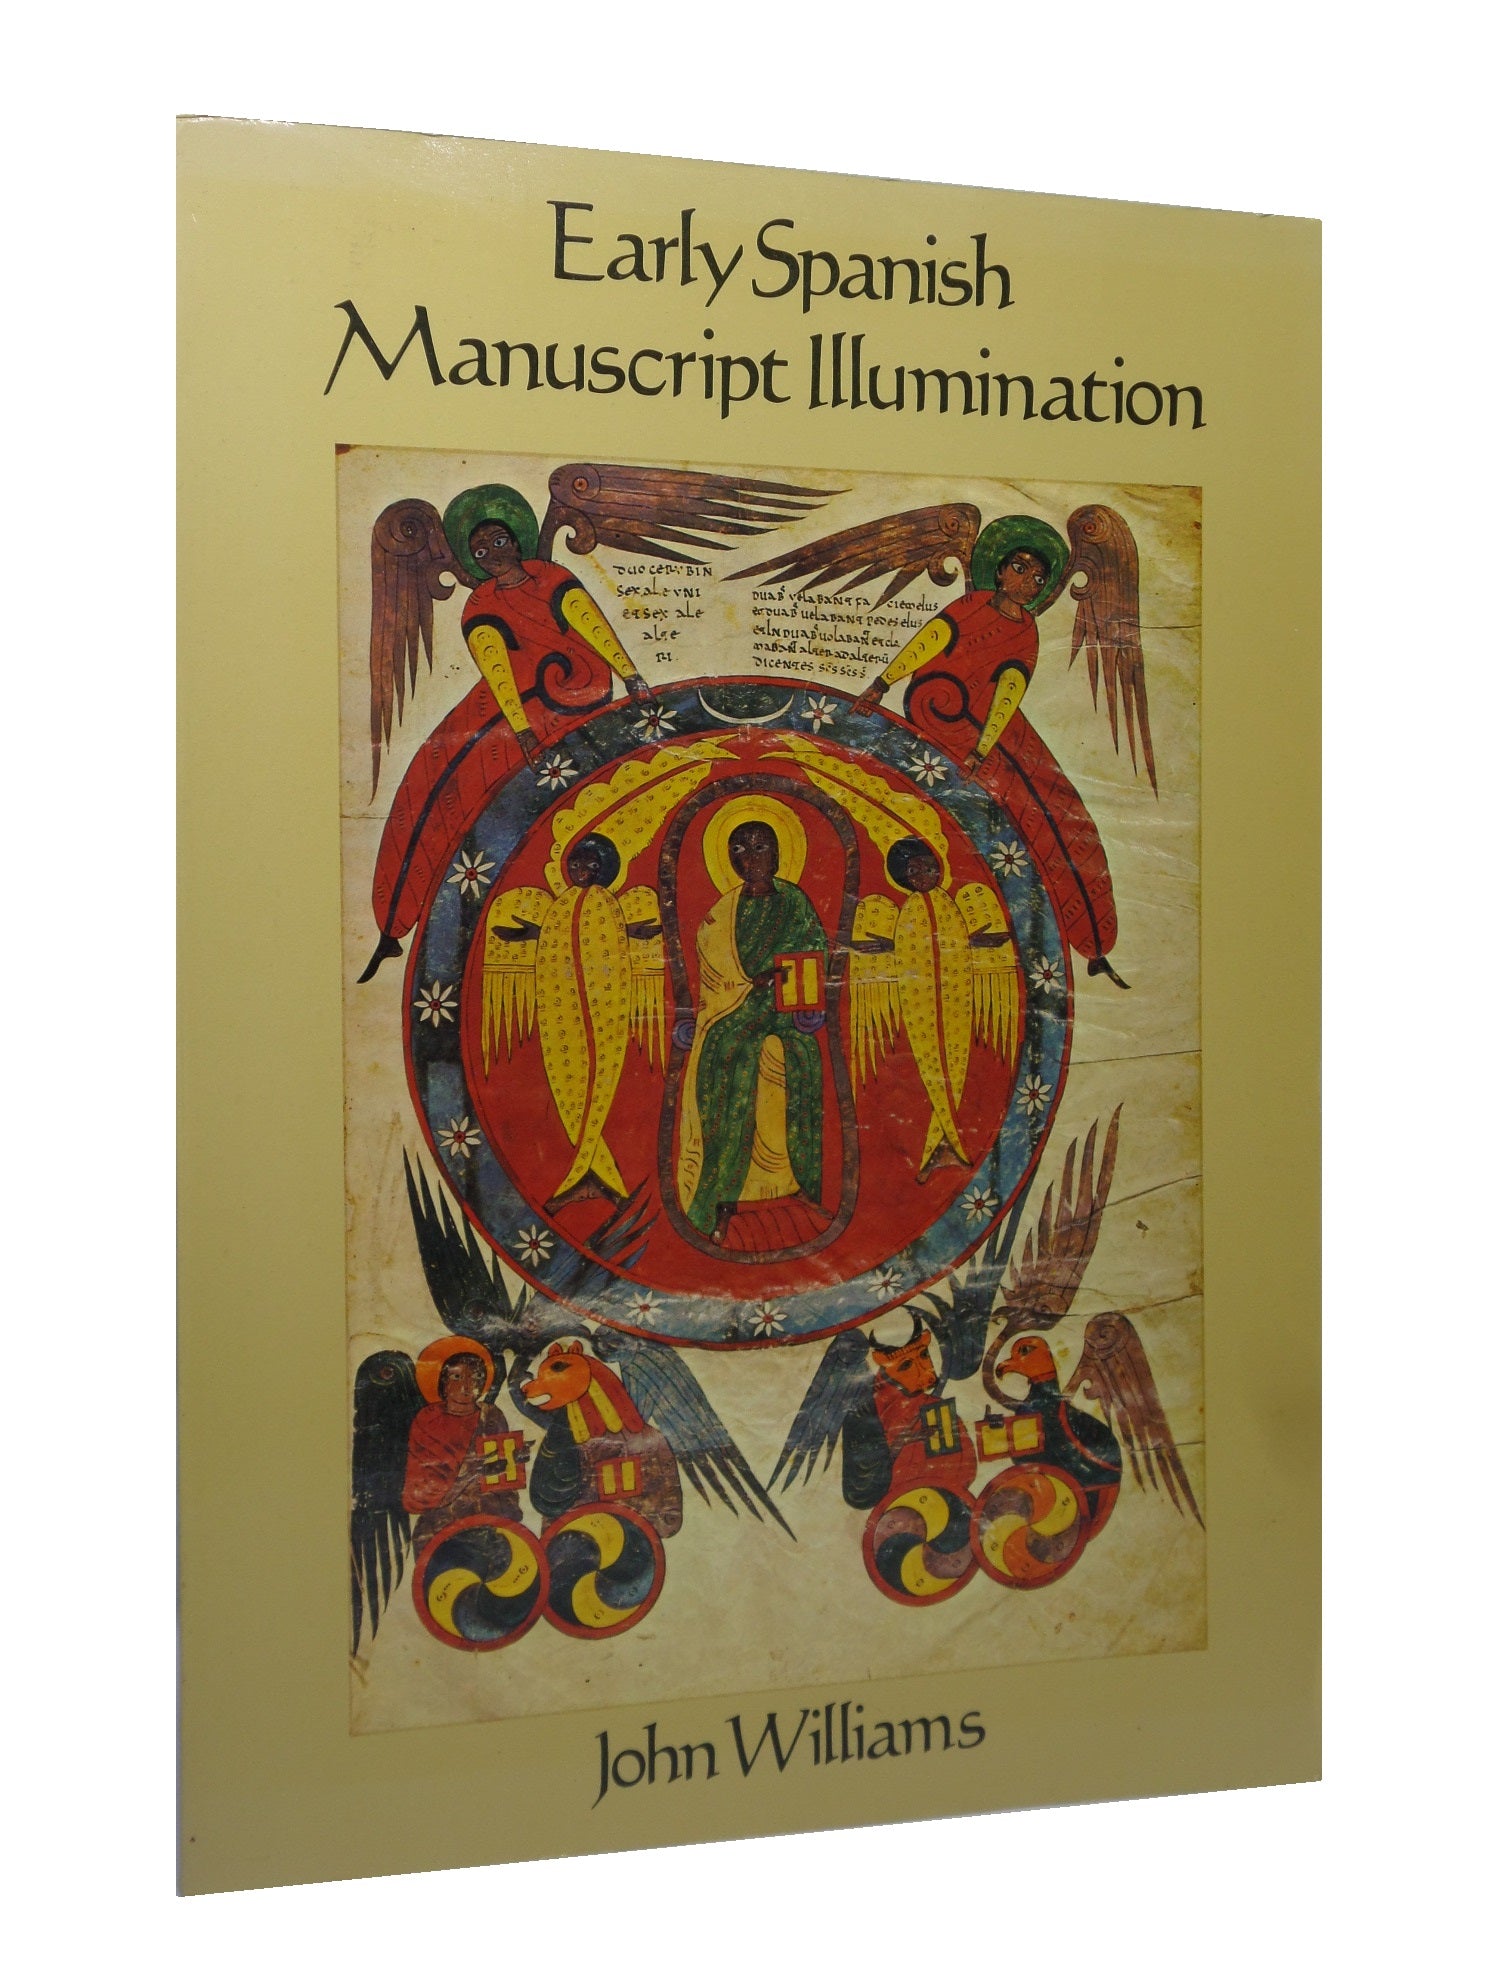 EARLY SPANISH MANUSCRIPT ILLUMINATION BY JOHN WILLIAMS 1977